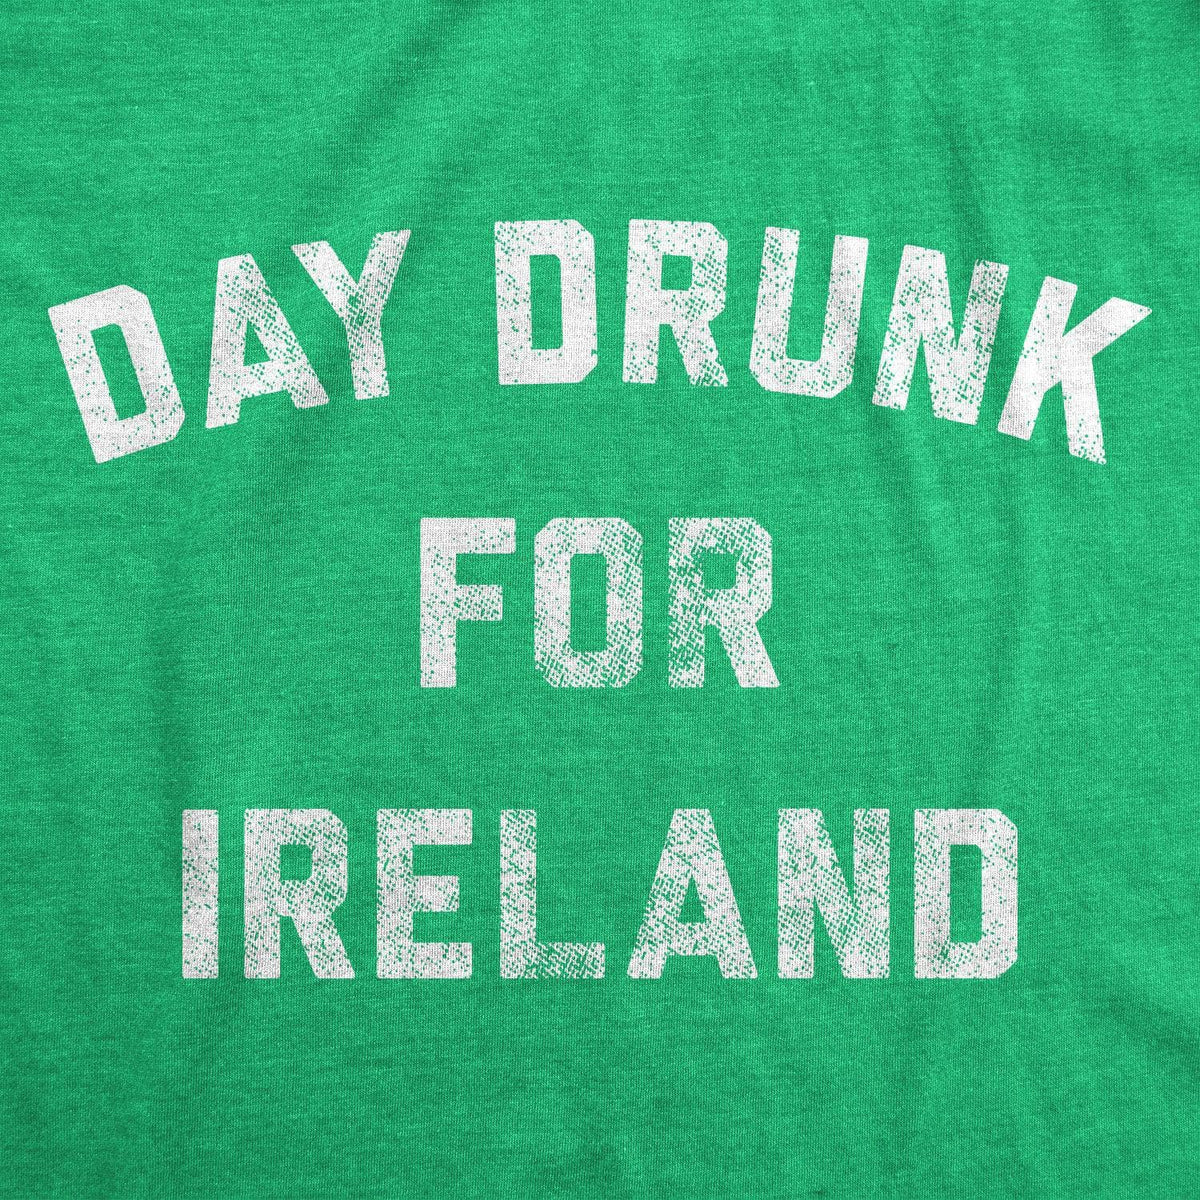 Day Drunk For Ireland Men&#39;s Tshirt  -  Crazy Dog T-Shirts